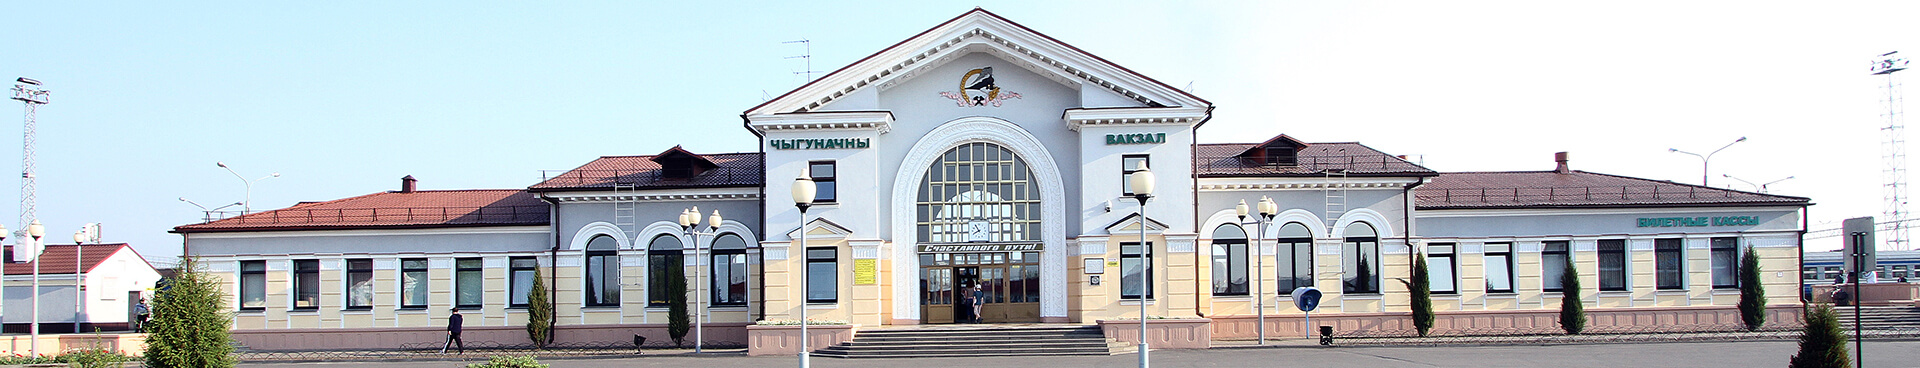 Kalinkavičy Railway Station